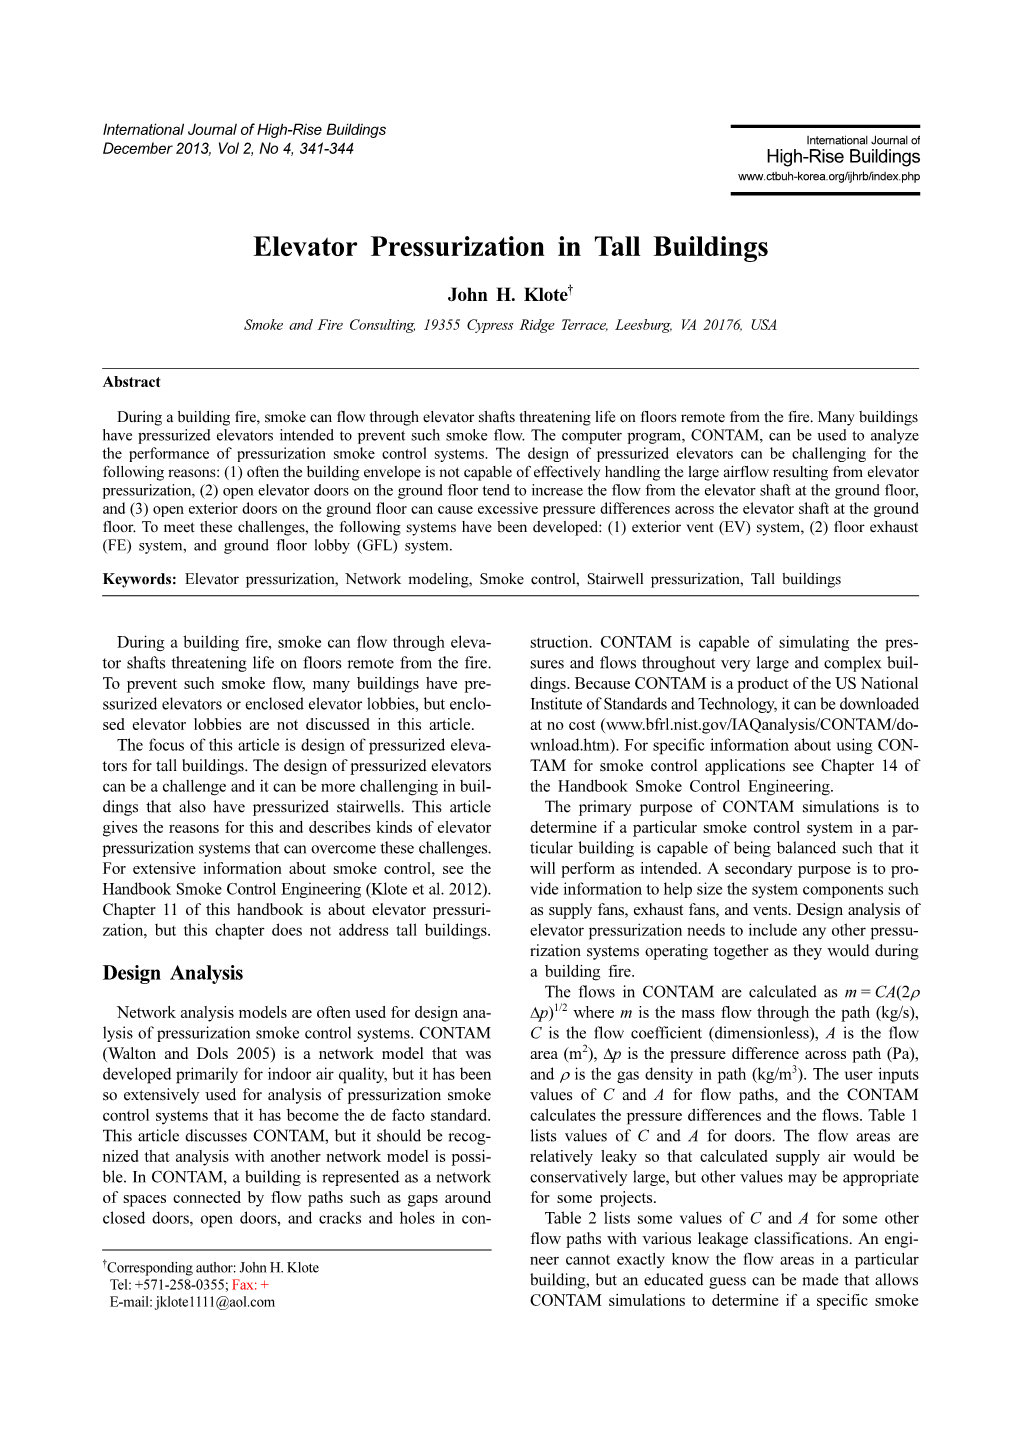 Elevator Pressurization in Tall Buildings John H